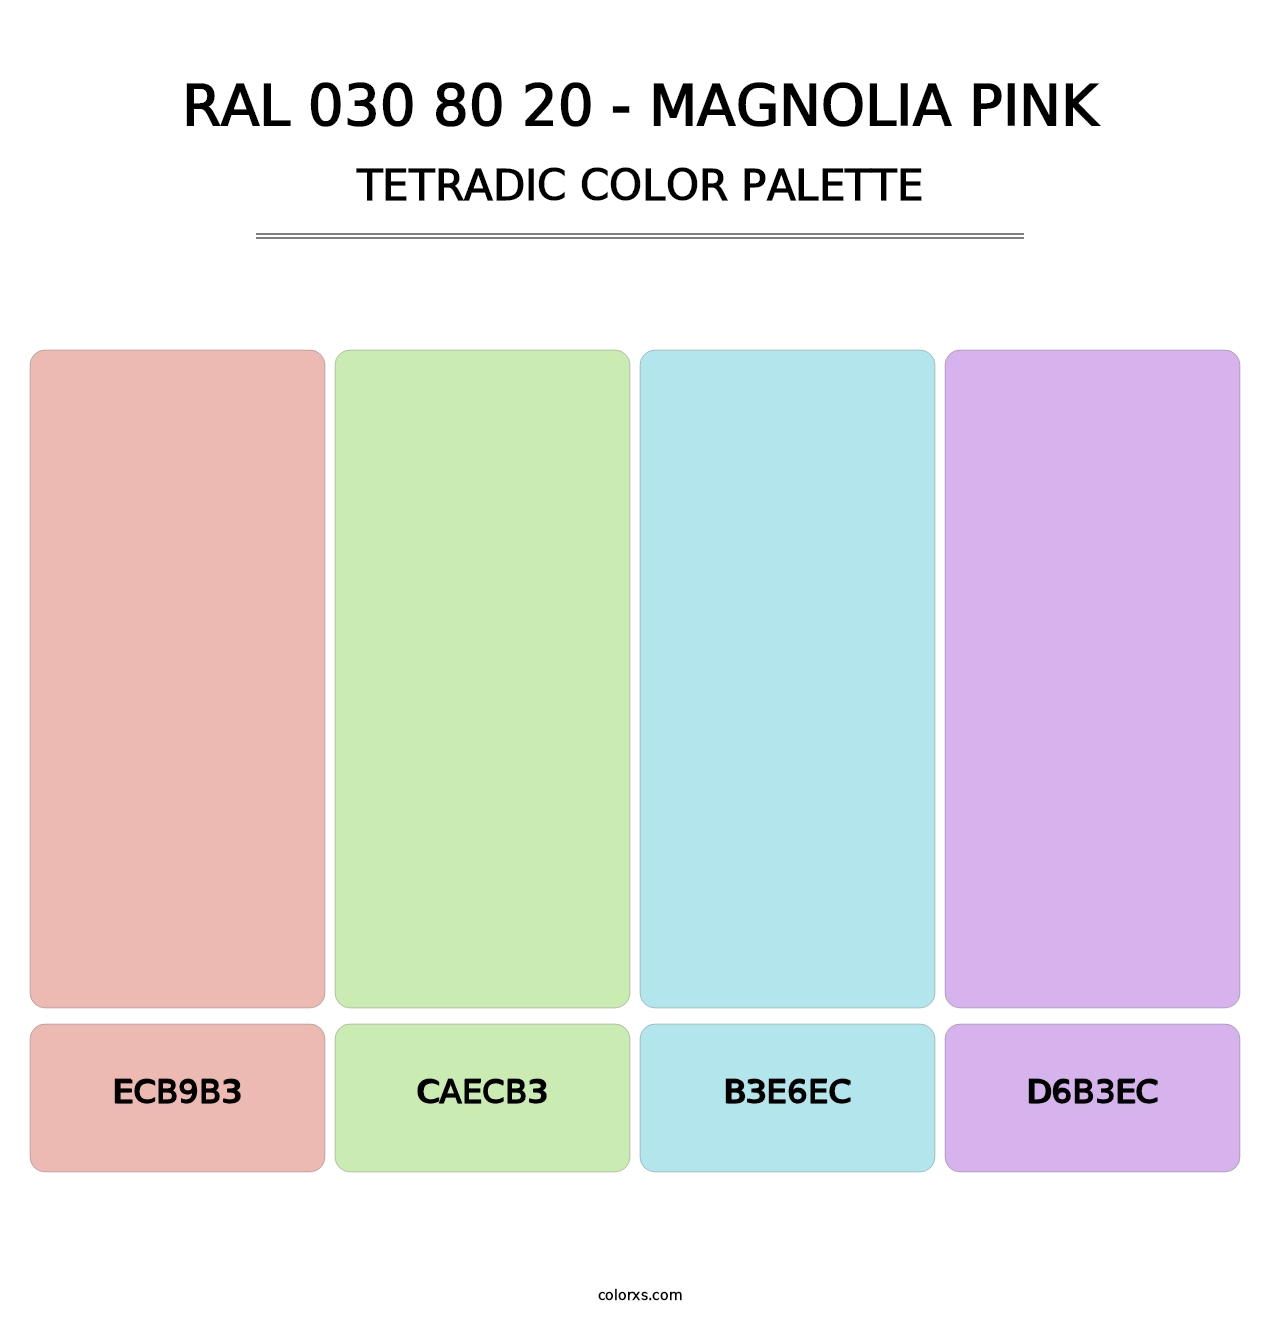 RAL 030 80 20 - Magnolia Pink - Tetradic Color Palette